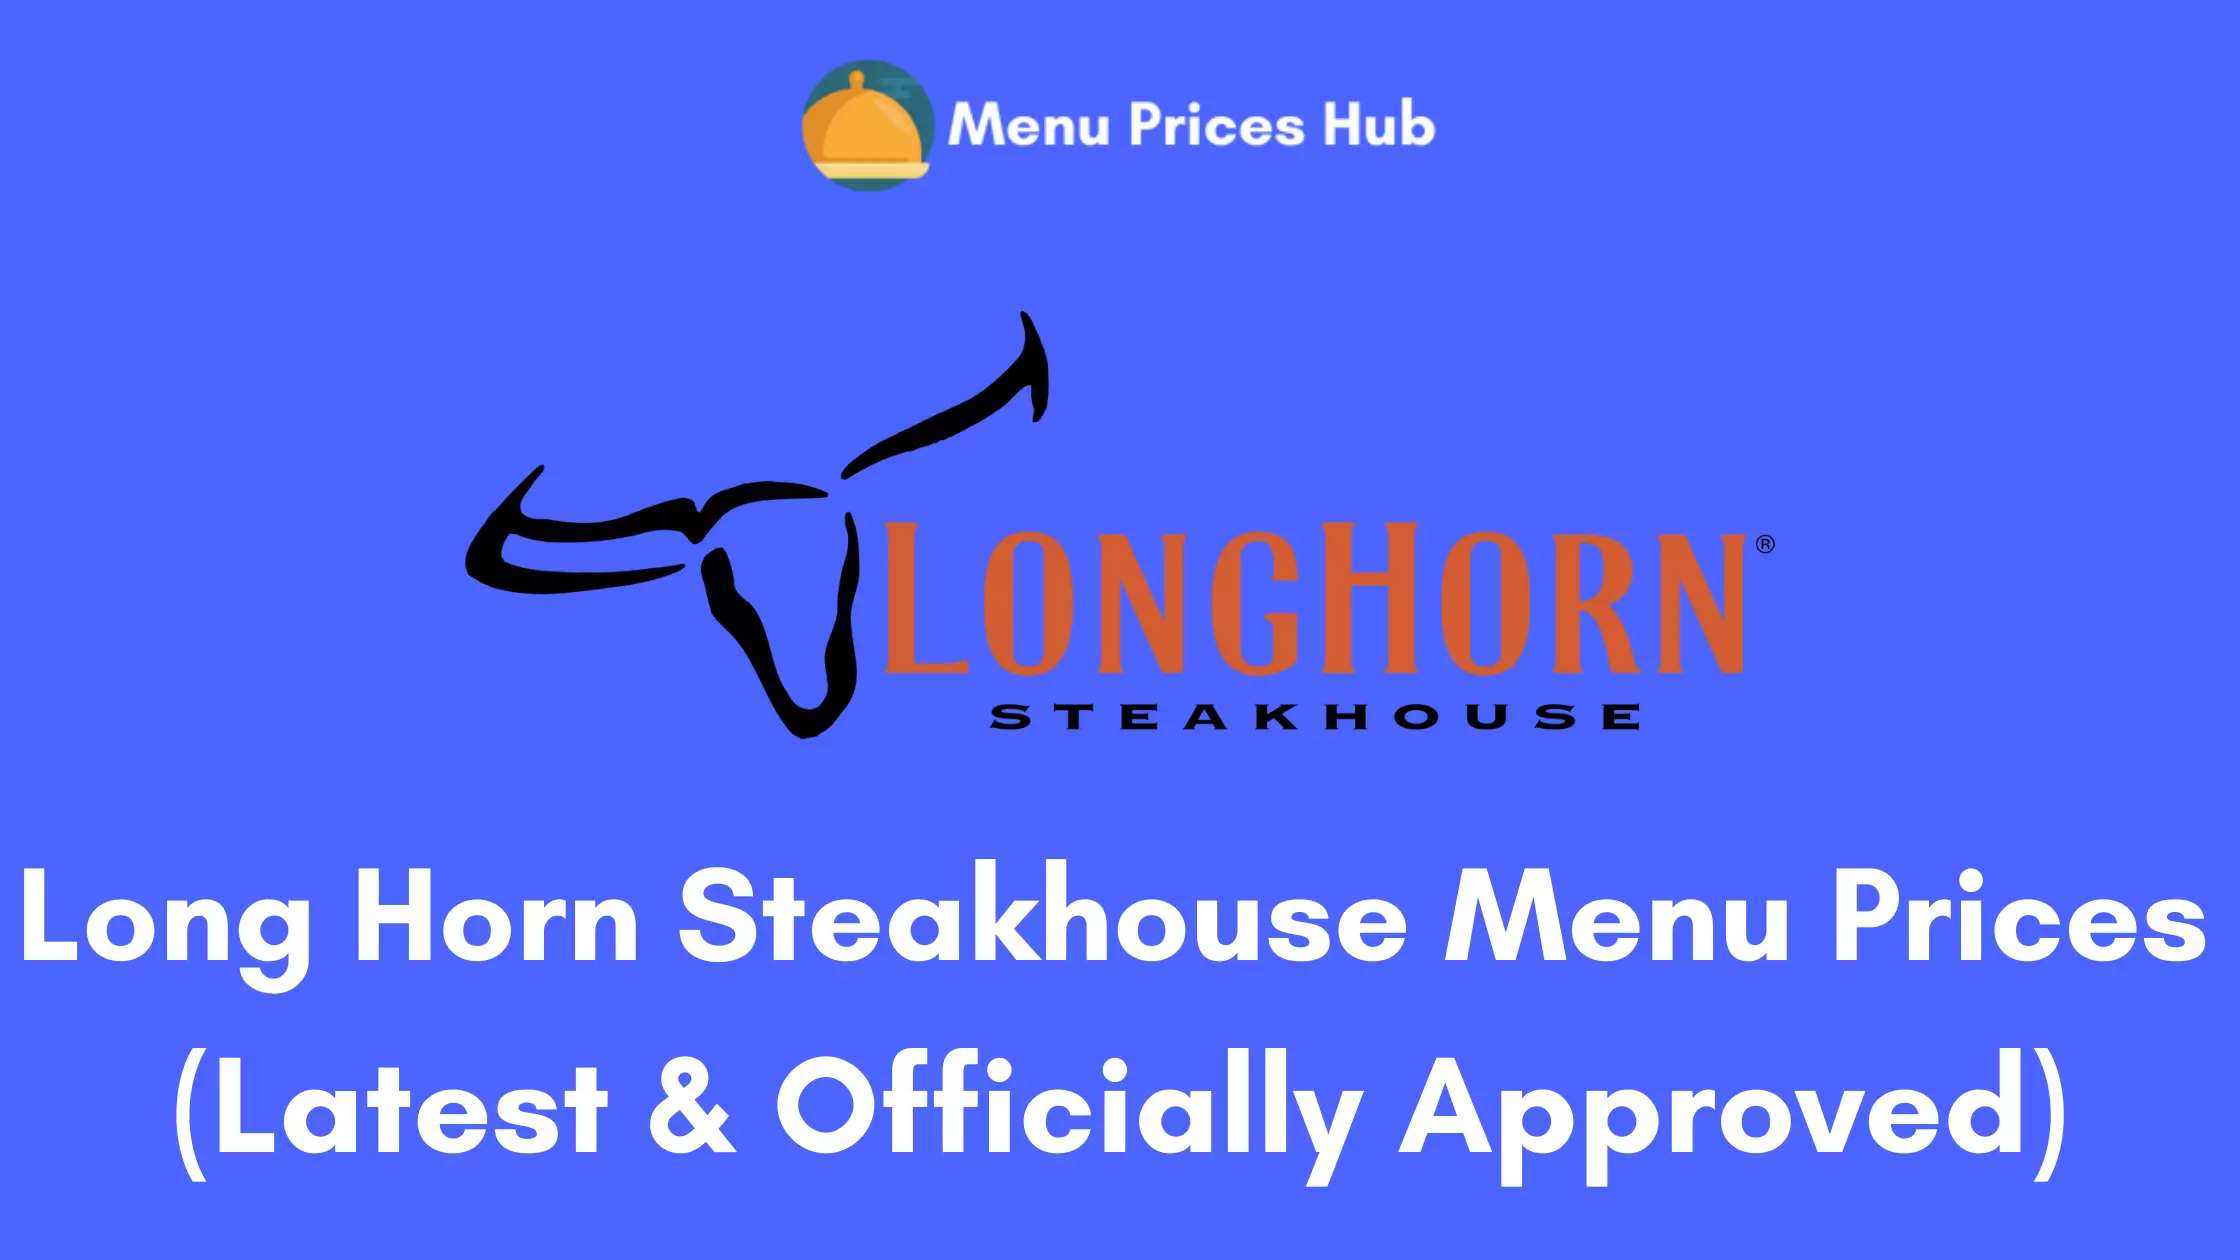 LongHorn Steakhouse Menu Prices